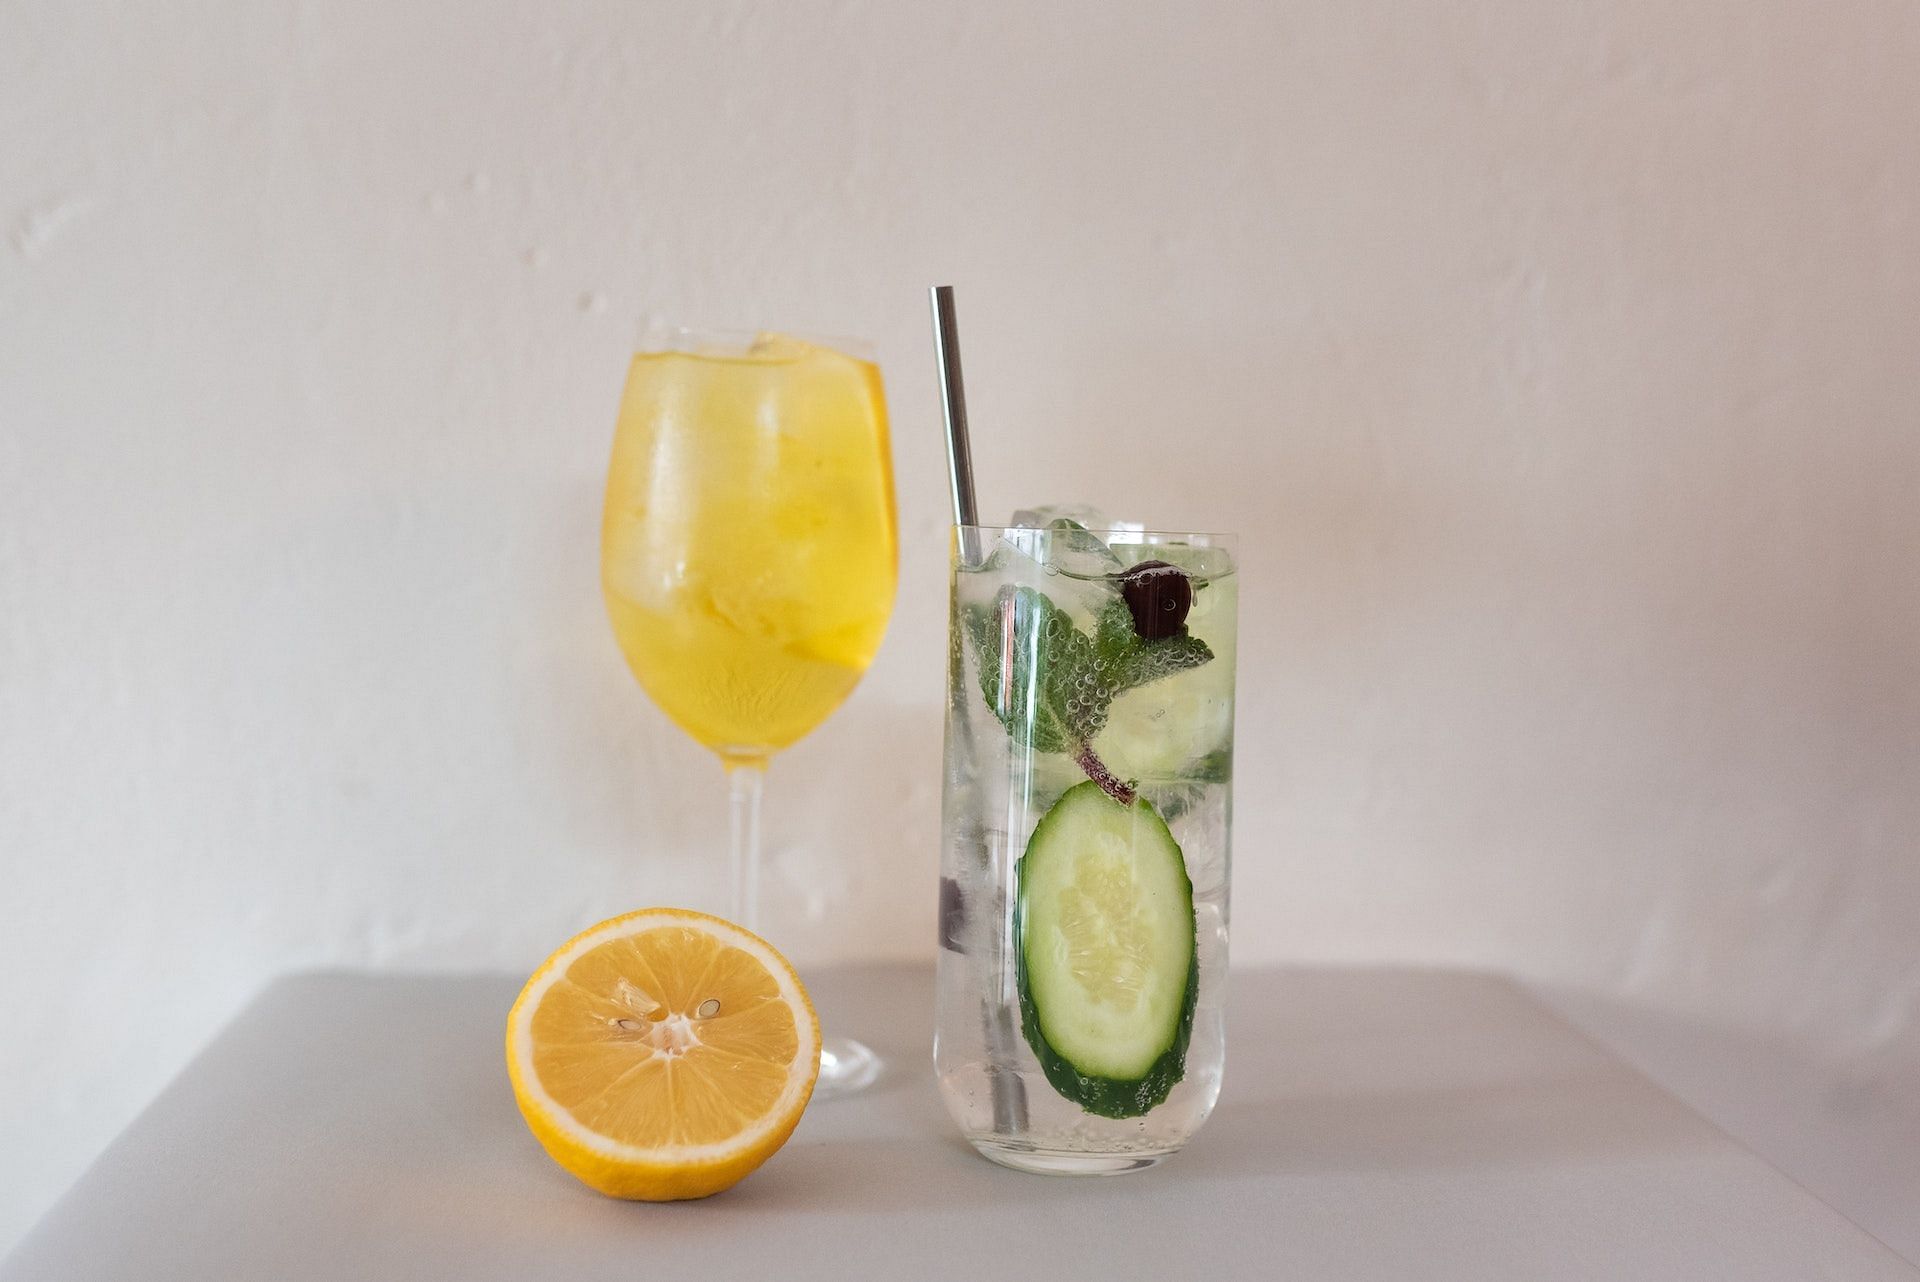 Cucumber water helps with weight loss. (Photo via Pexels/Arina Krasnikova)